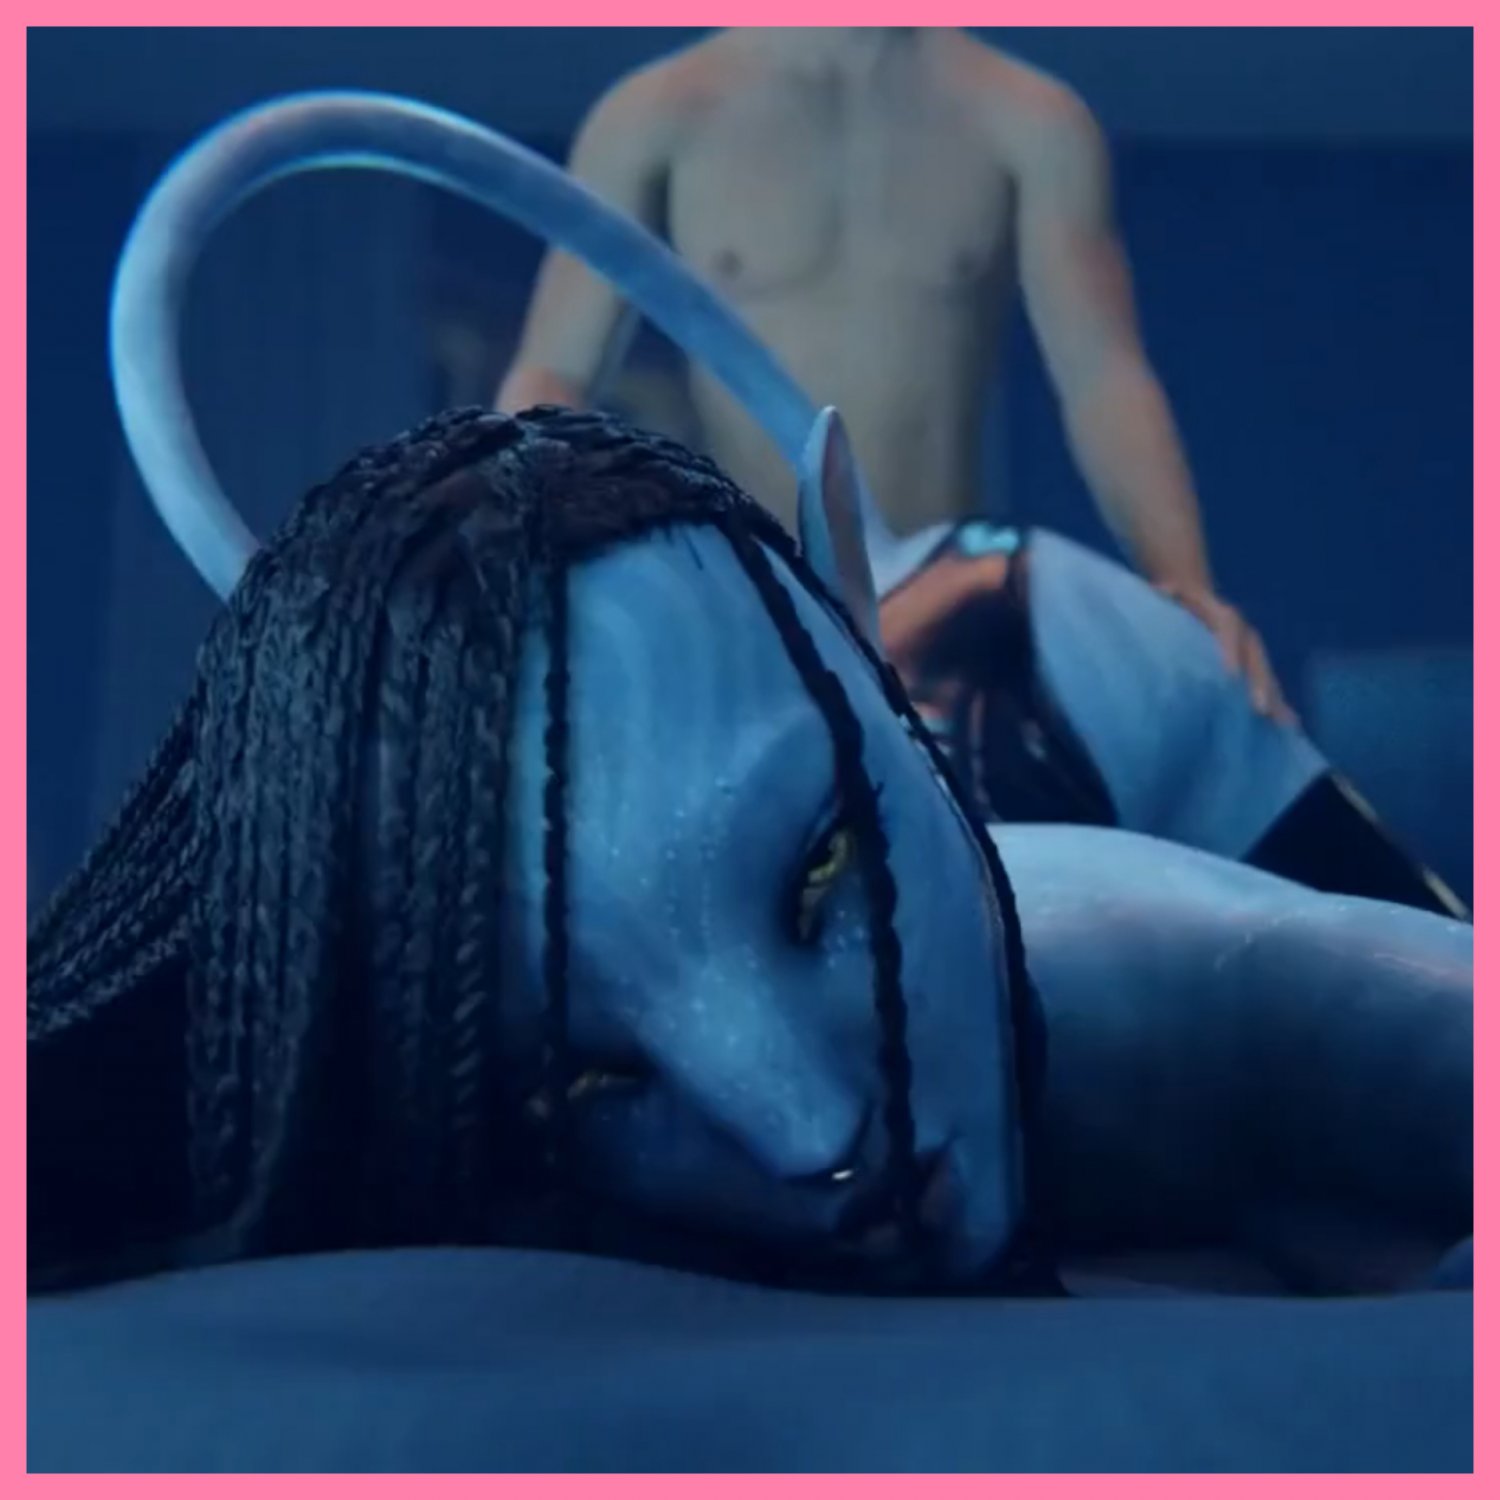 Gravatar Porn - Avatar 3: Trailer - Porn Videos & Photos - EroMe